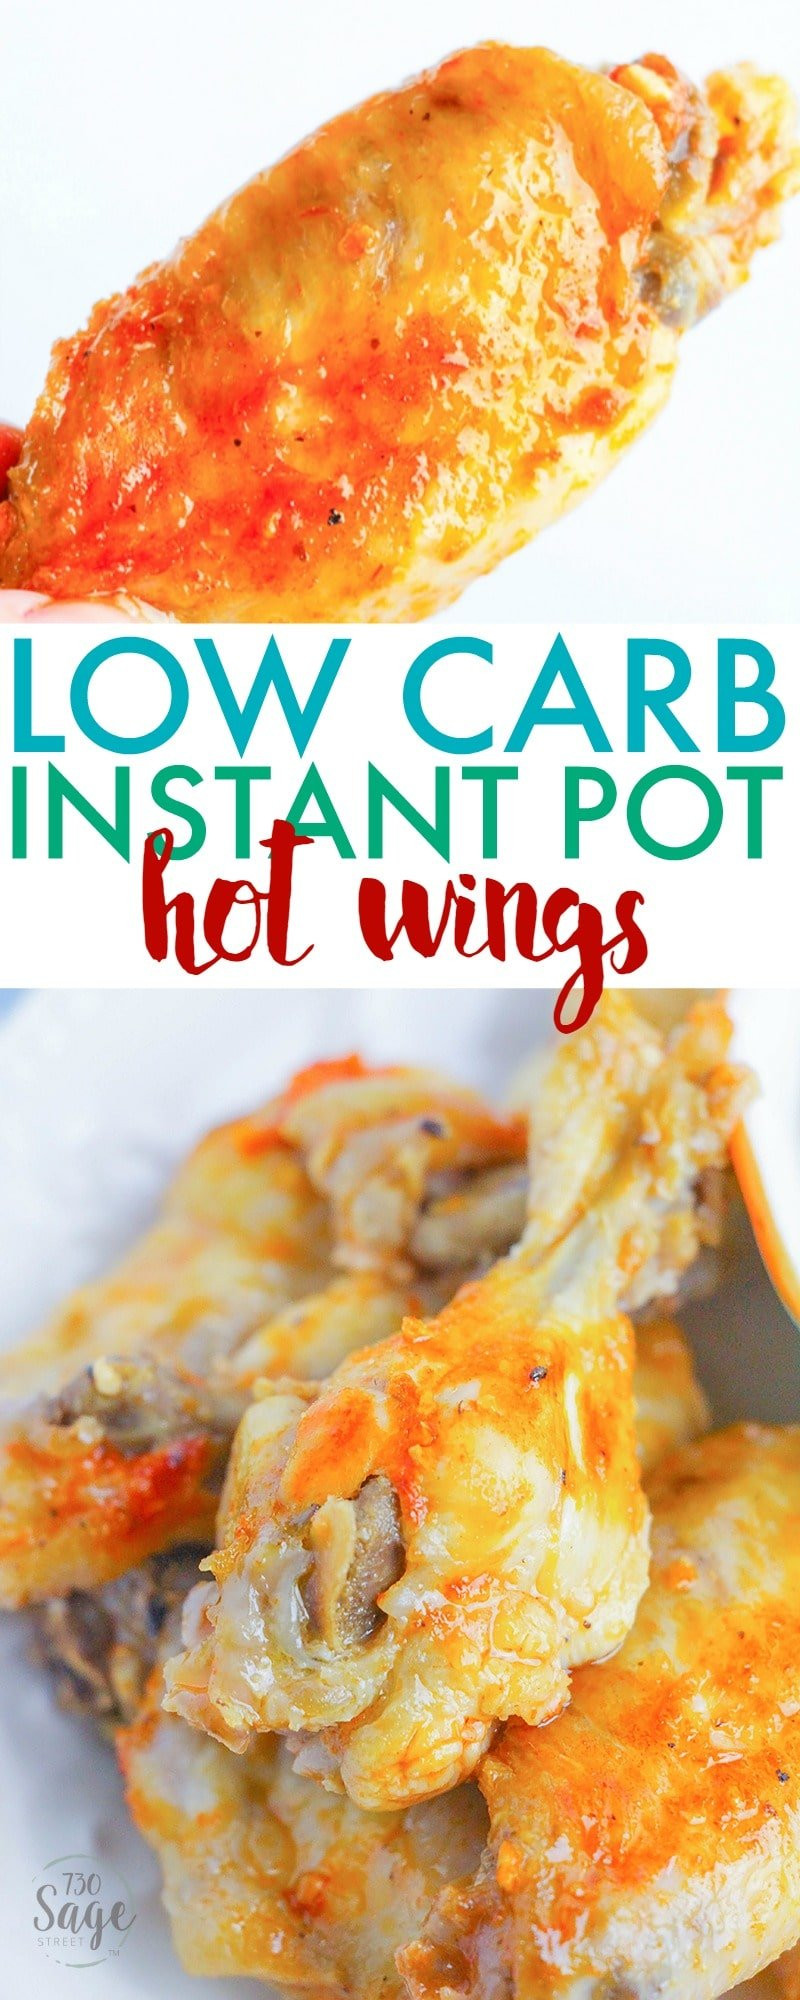 Best Low Carb Instant Pot Recipes
 Low Carb Instant Pot Hot Wings 730 Sage Street